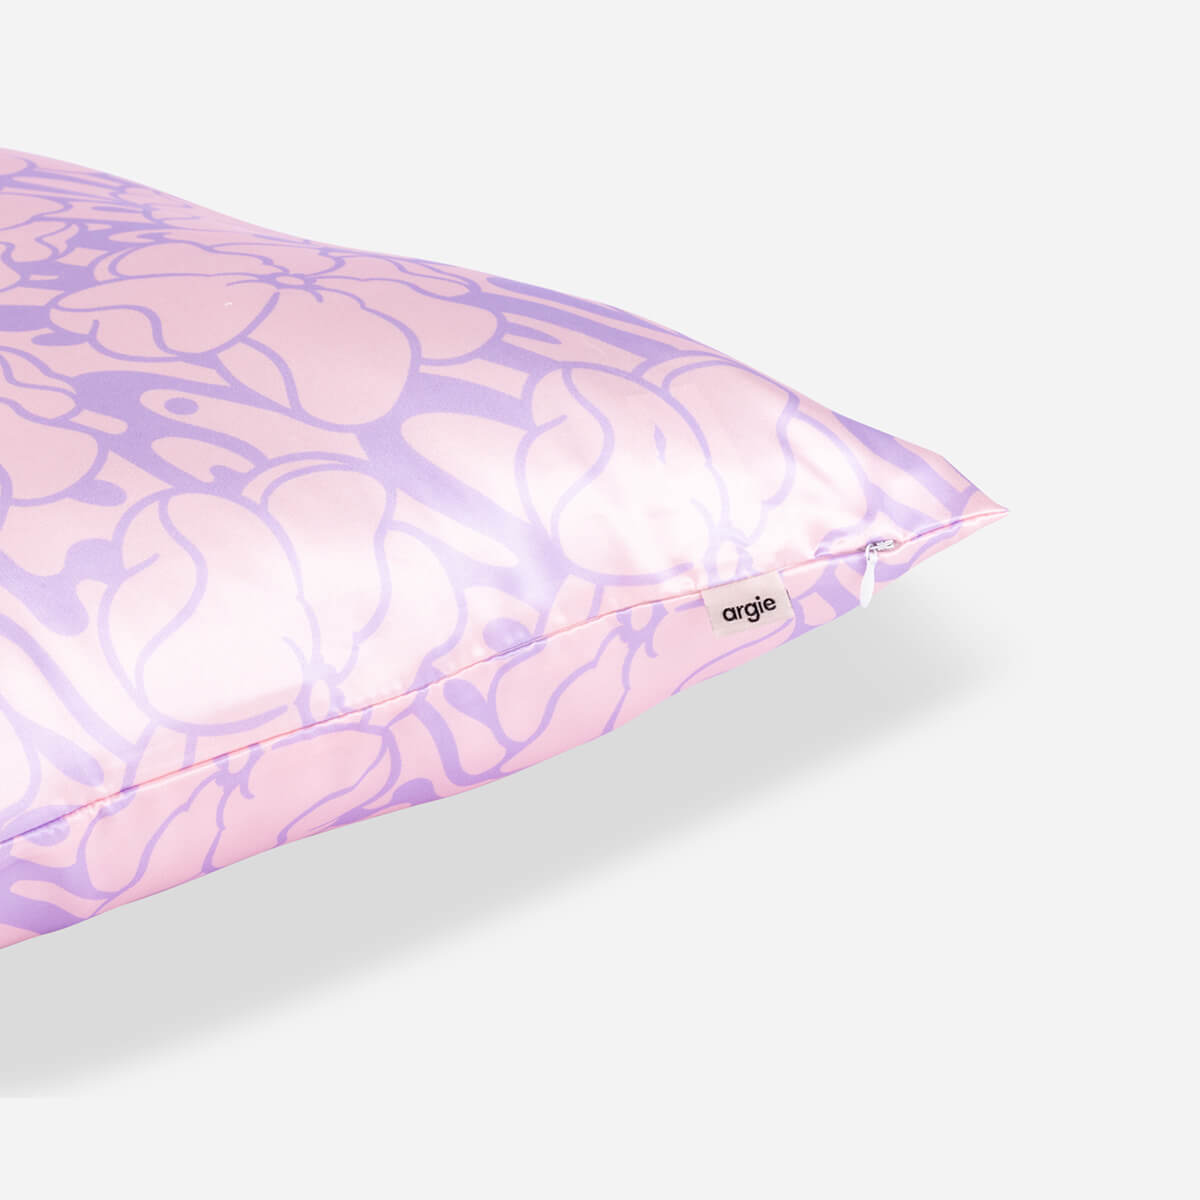 Satin Pillowcase - Floral Pattern